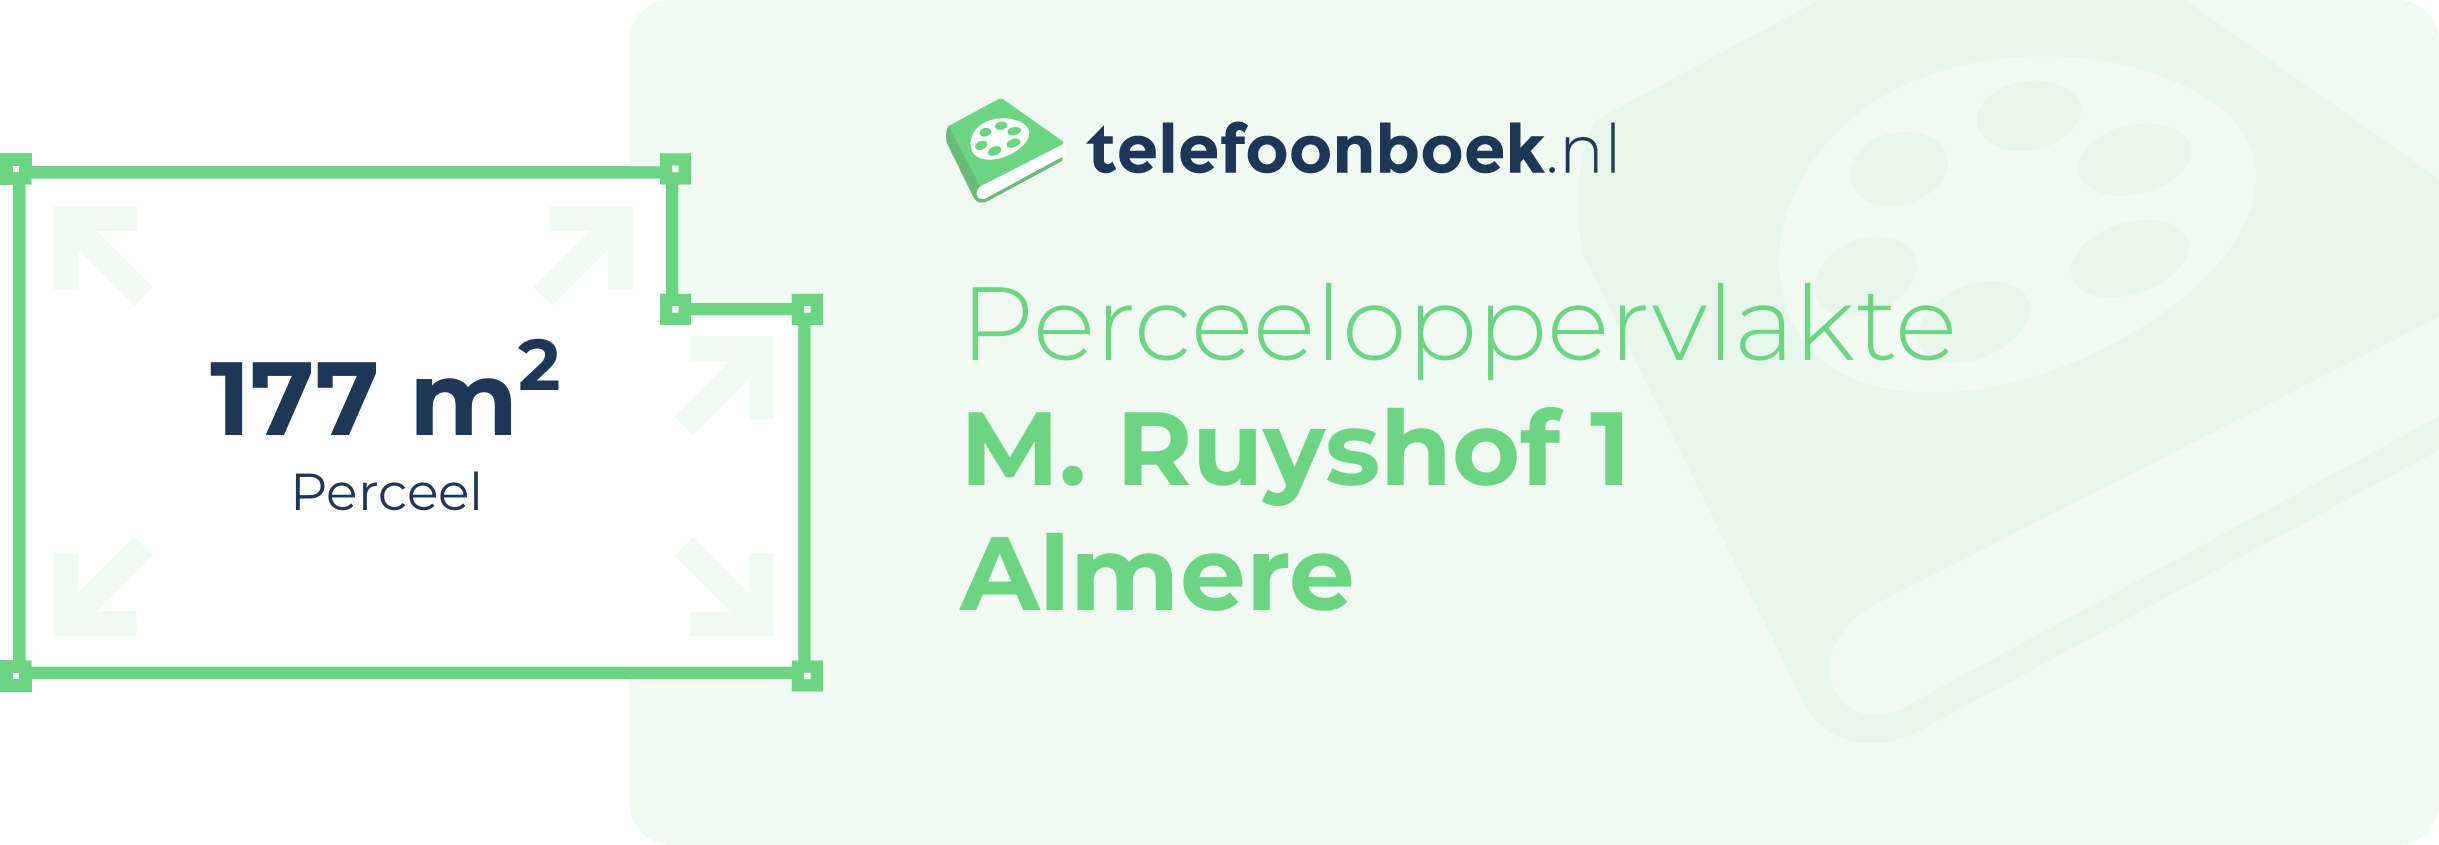 Perceeloppervlakte M. Ruyshof 1 Almere